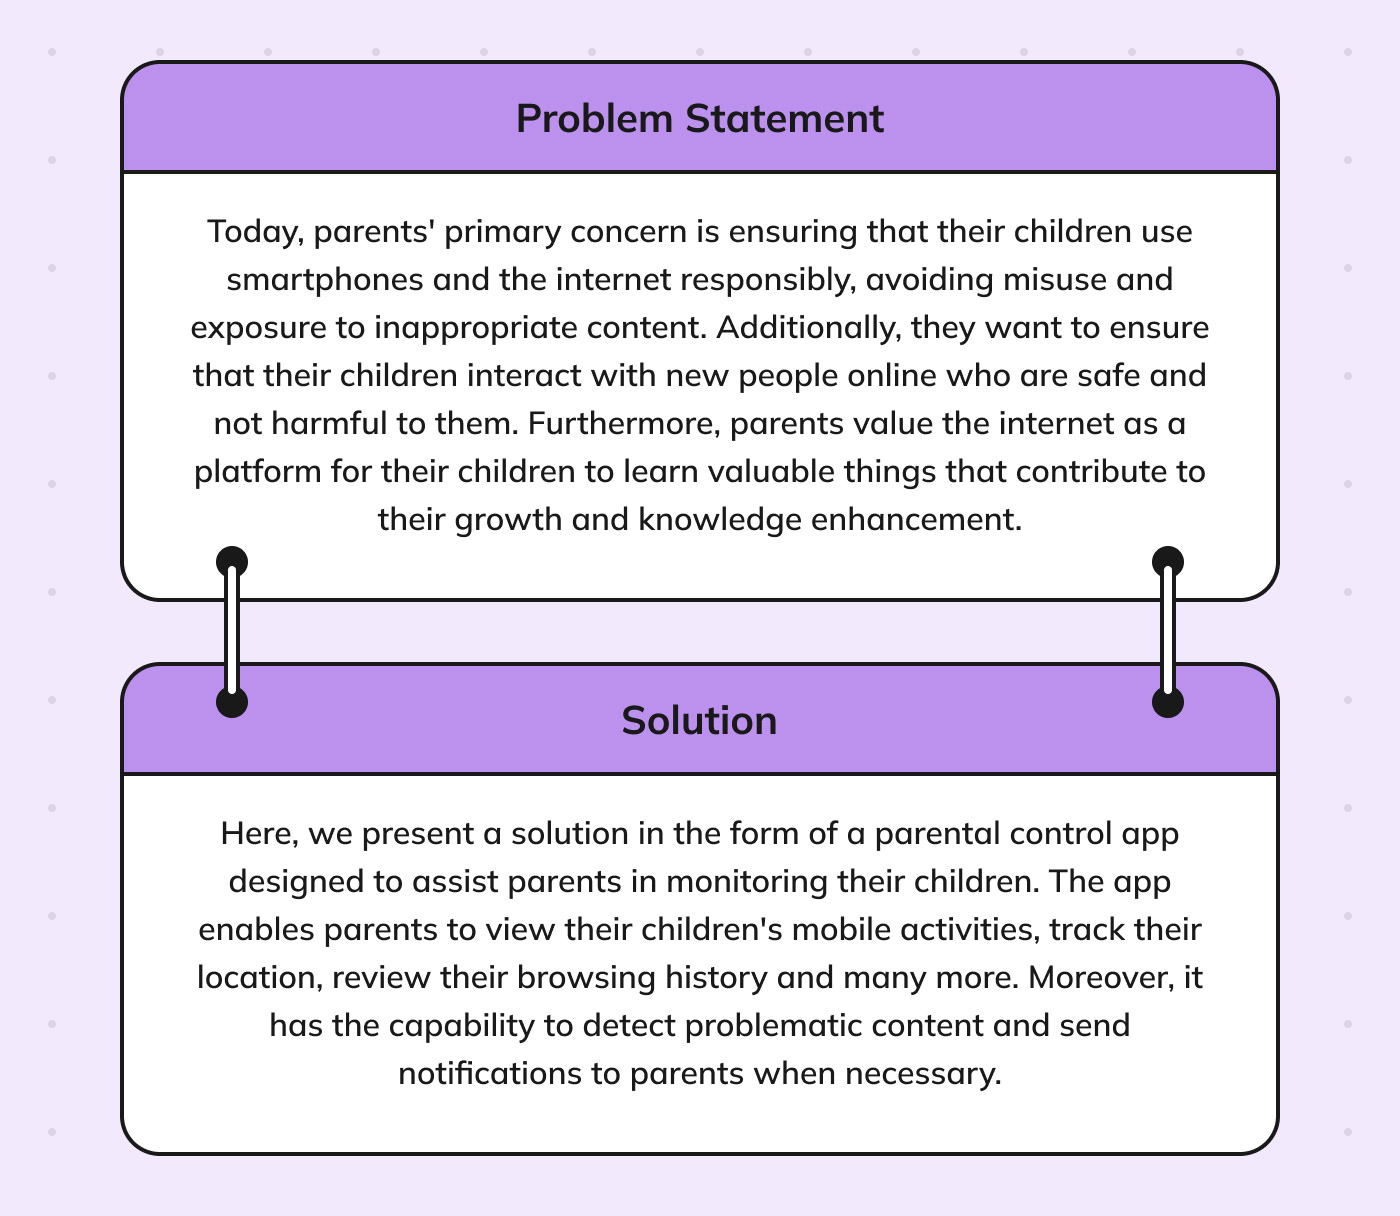 kids parents UI/UX parental control location activity statistics kids app neubrutalism mobile app pairing